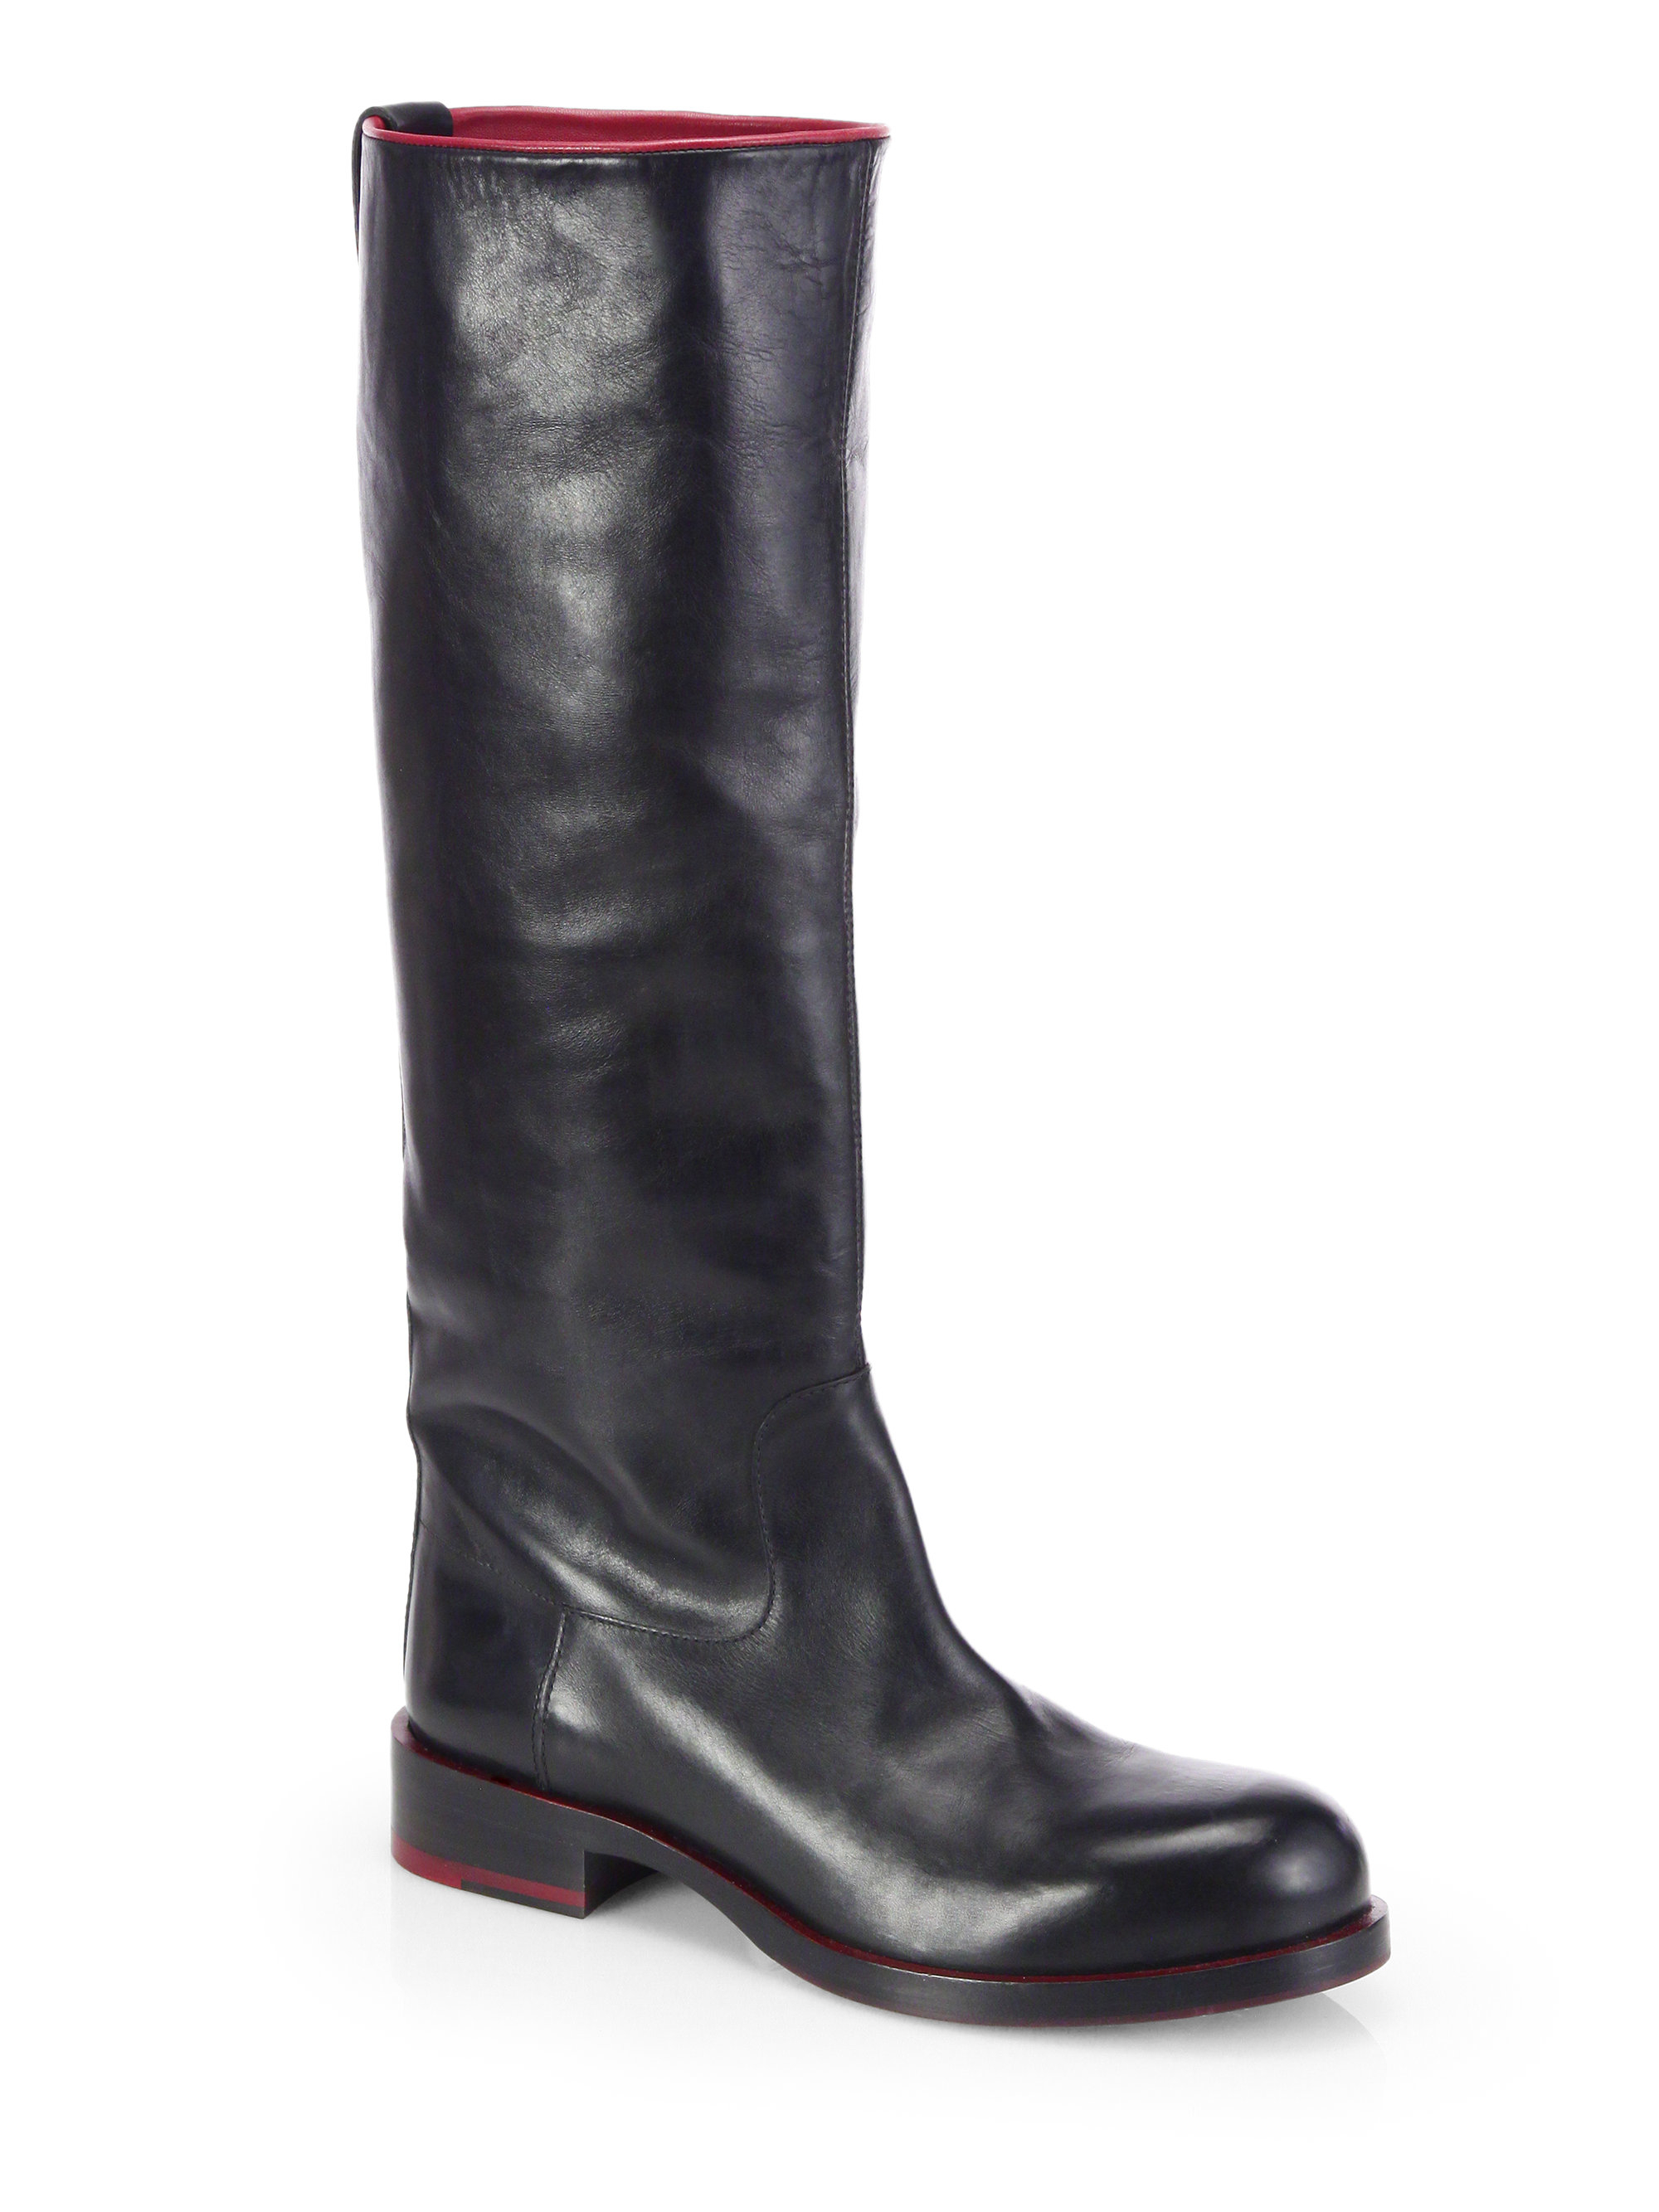 Jil Sander Leather Kneehigh Boots in Black | Lyst